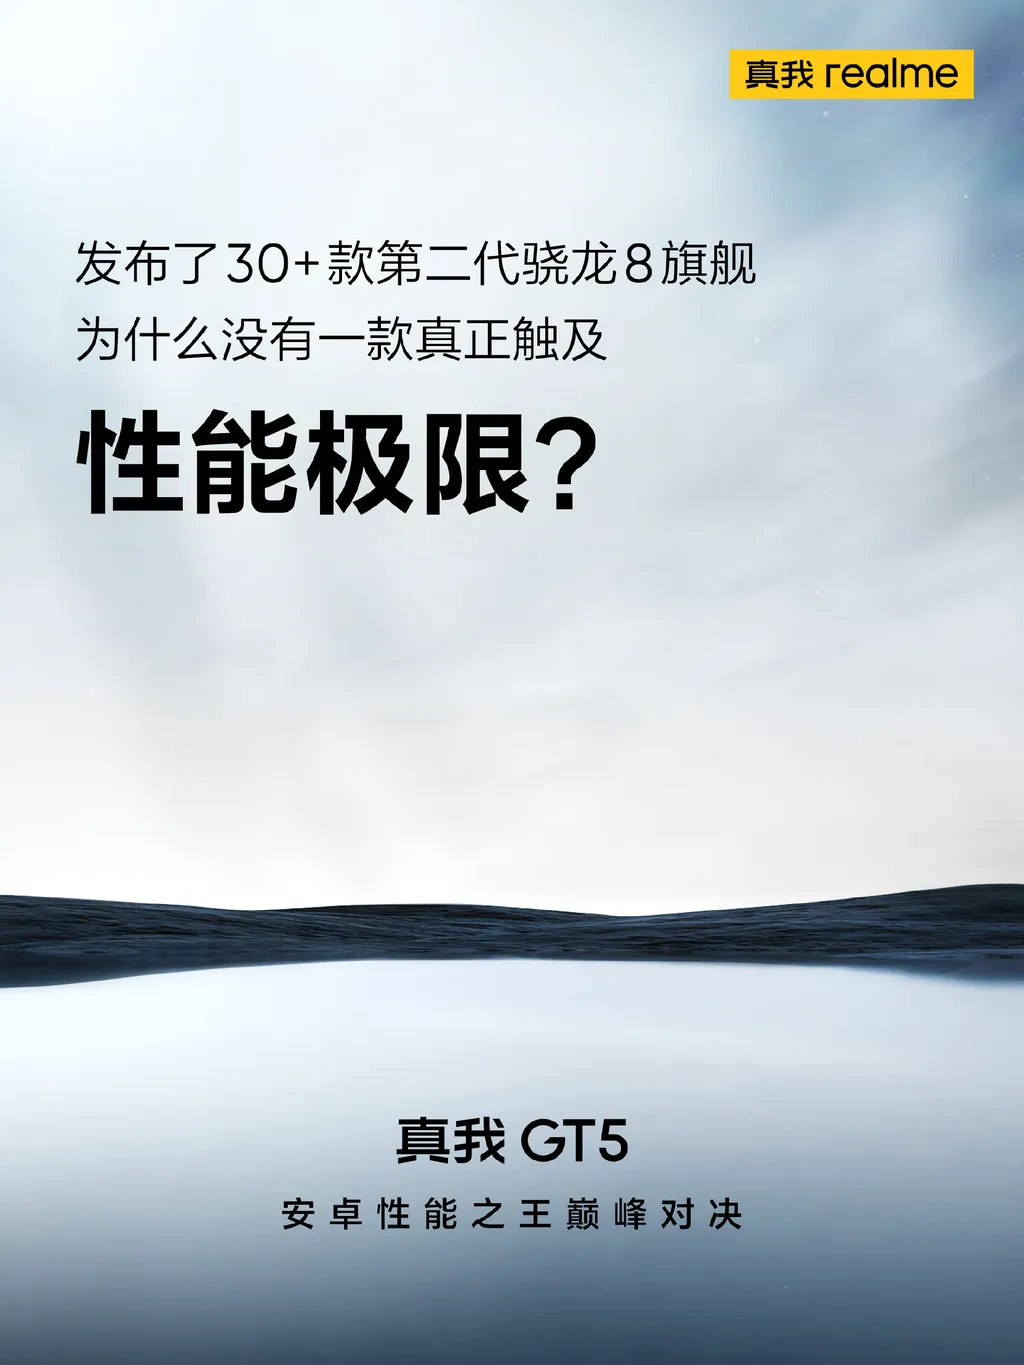 Teaser confirma Realme GT 5 com Snapdragon 8 Gen 2 (Imagem: Realme)